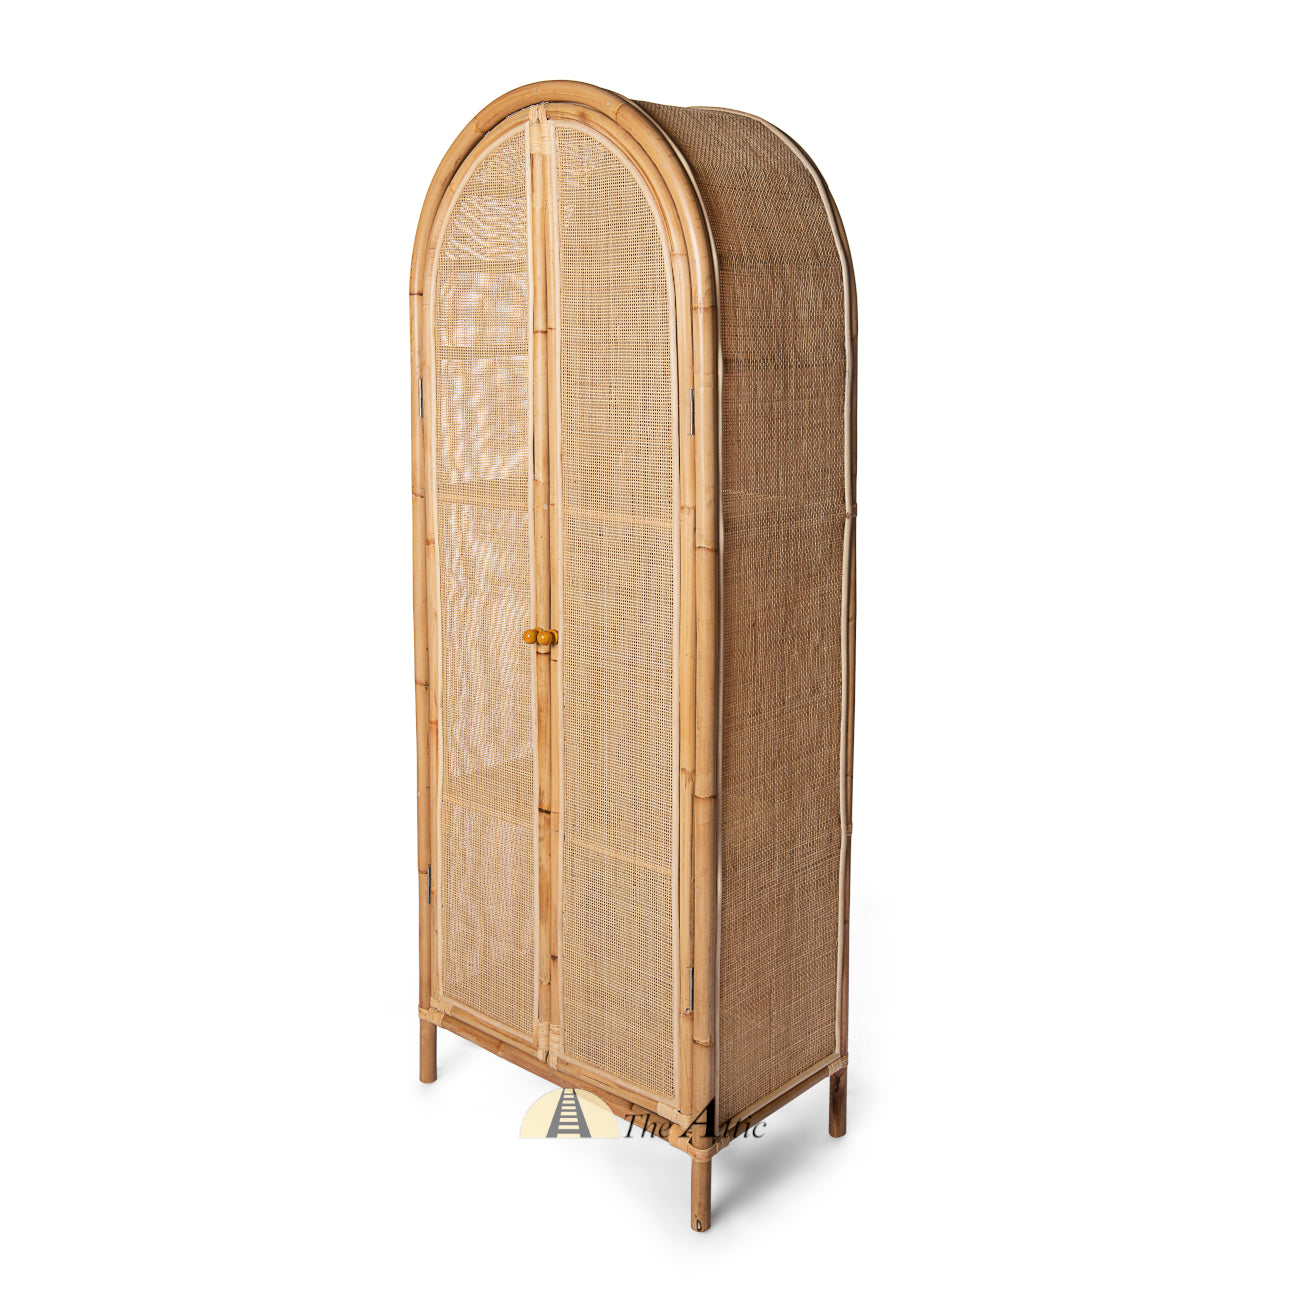 Cancun Tall Arch Rattan Cabinet, Natural Wicker Furniture - The Attic Dubai